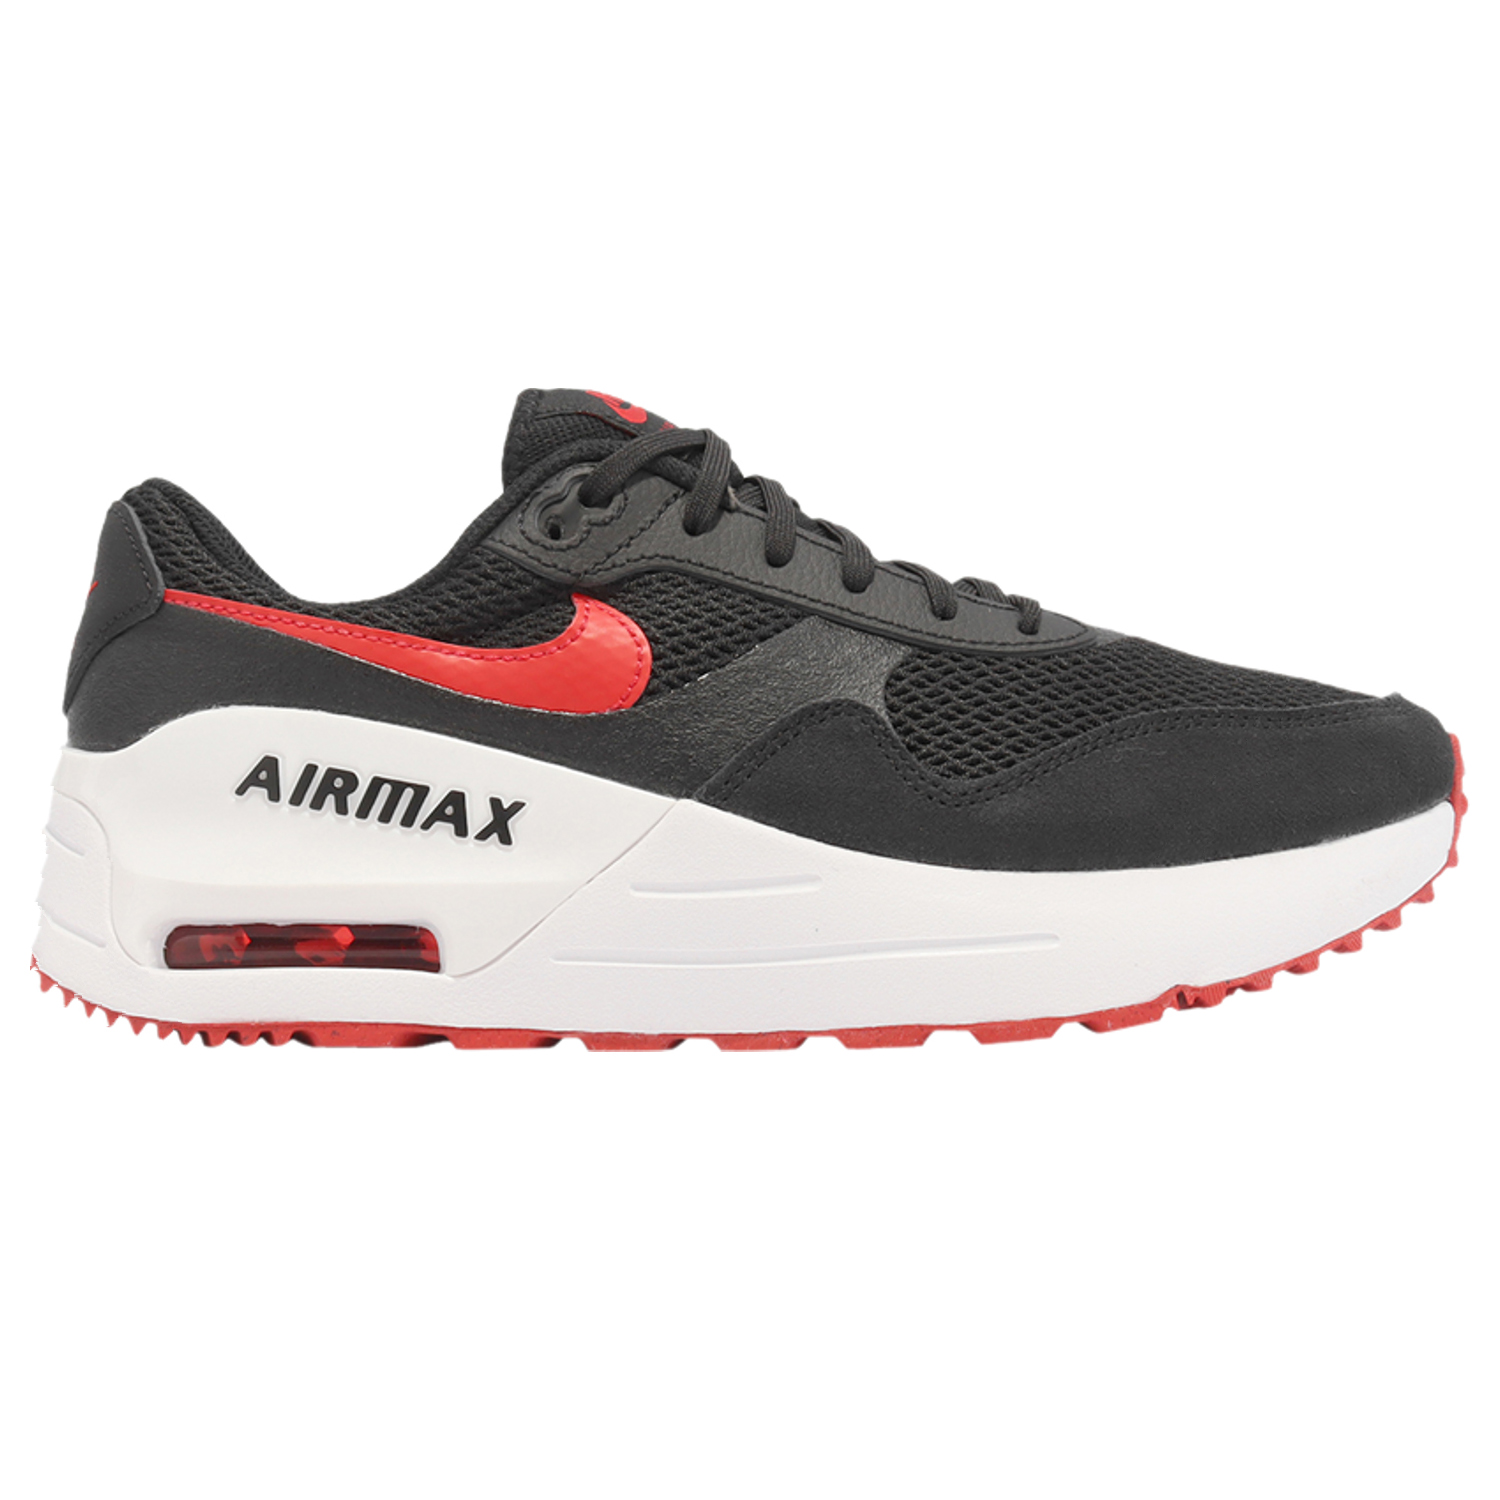 Кроссовки Nike Air Max SYSTM 'Black University Red', черный кроссовки низкие air max tw td nike sportswear цвет white university red black